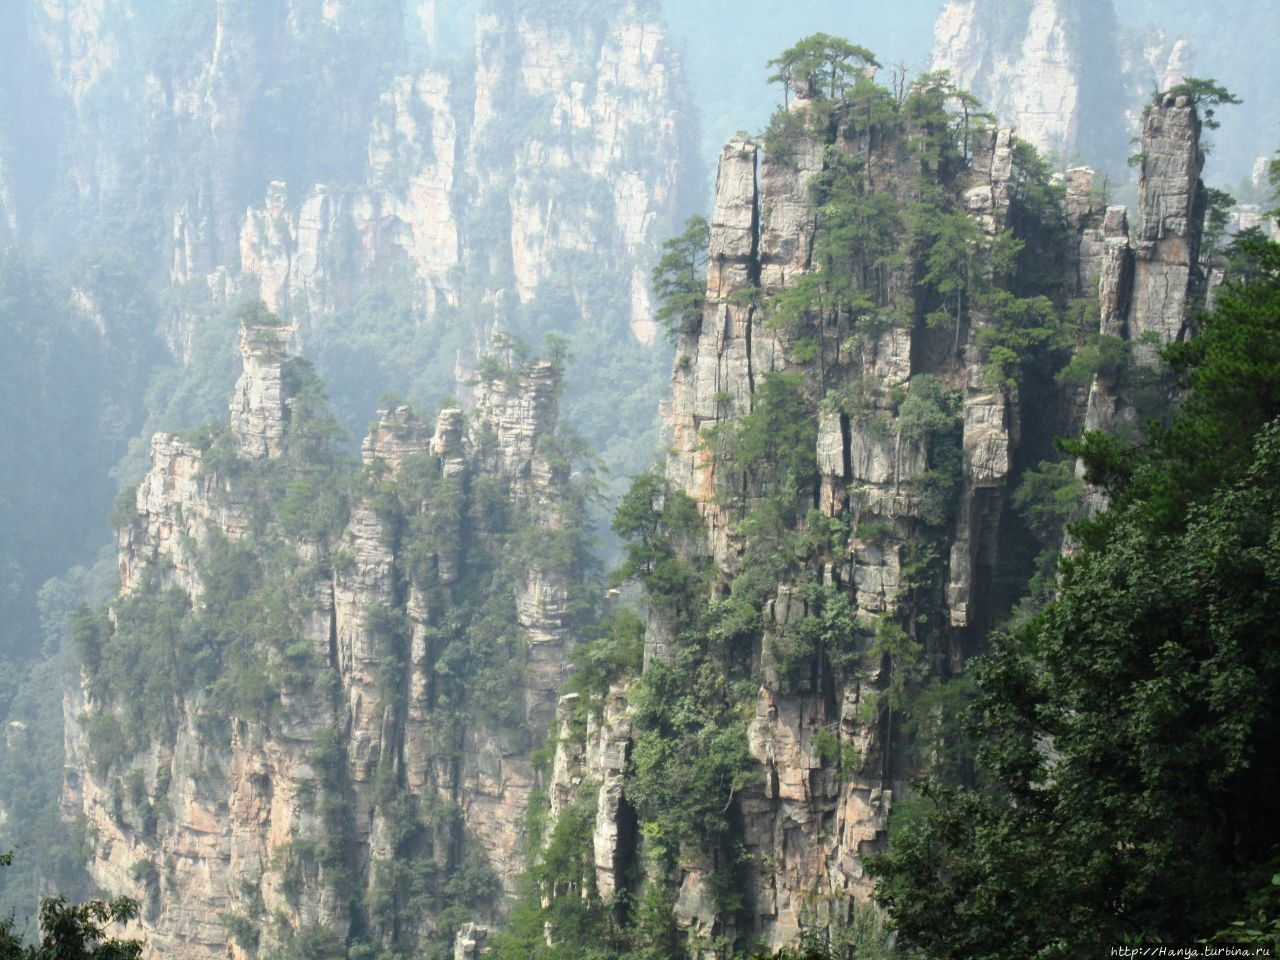 Резерват Тяньцзышань / Tianzi Mountain Natural Resource Reserve